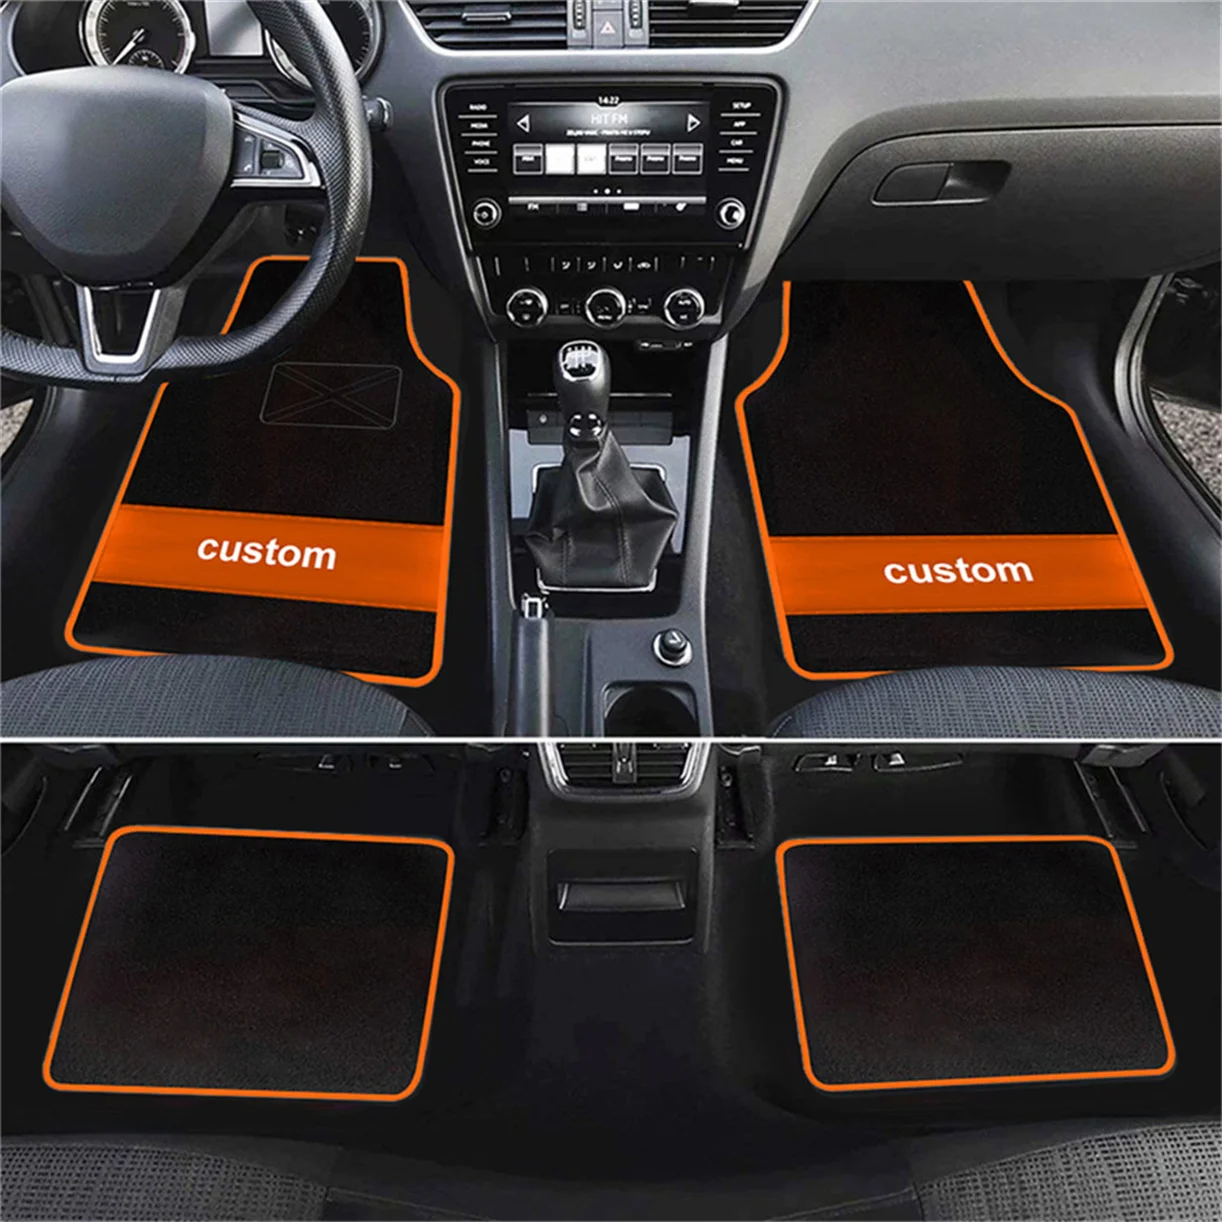 

Автомобильные коврики для Buick Lacrosse анклава Encore Regal GL6 Excelle Verano Envision, Люцерна, аксессуары для автомобильного интерьера